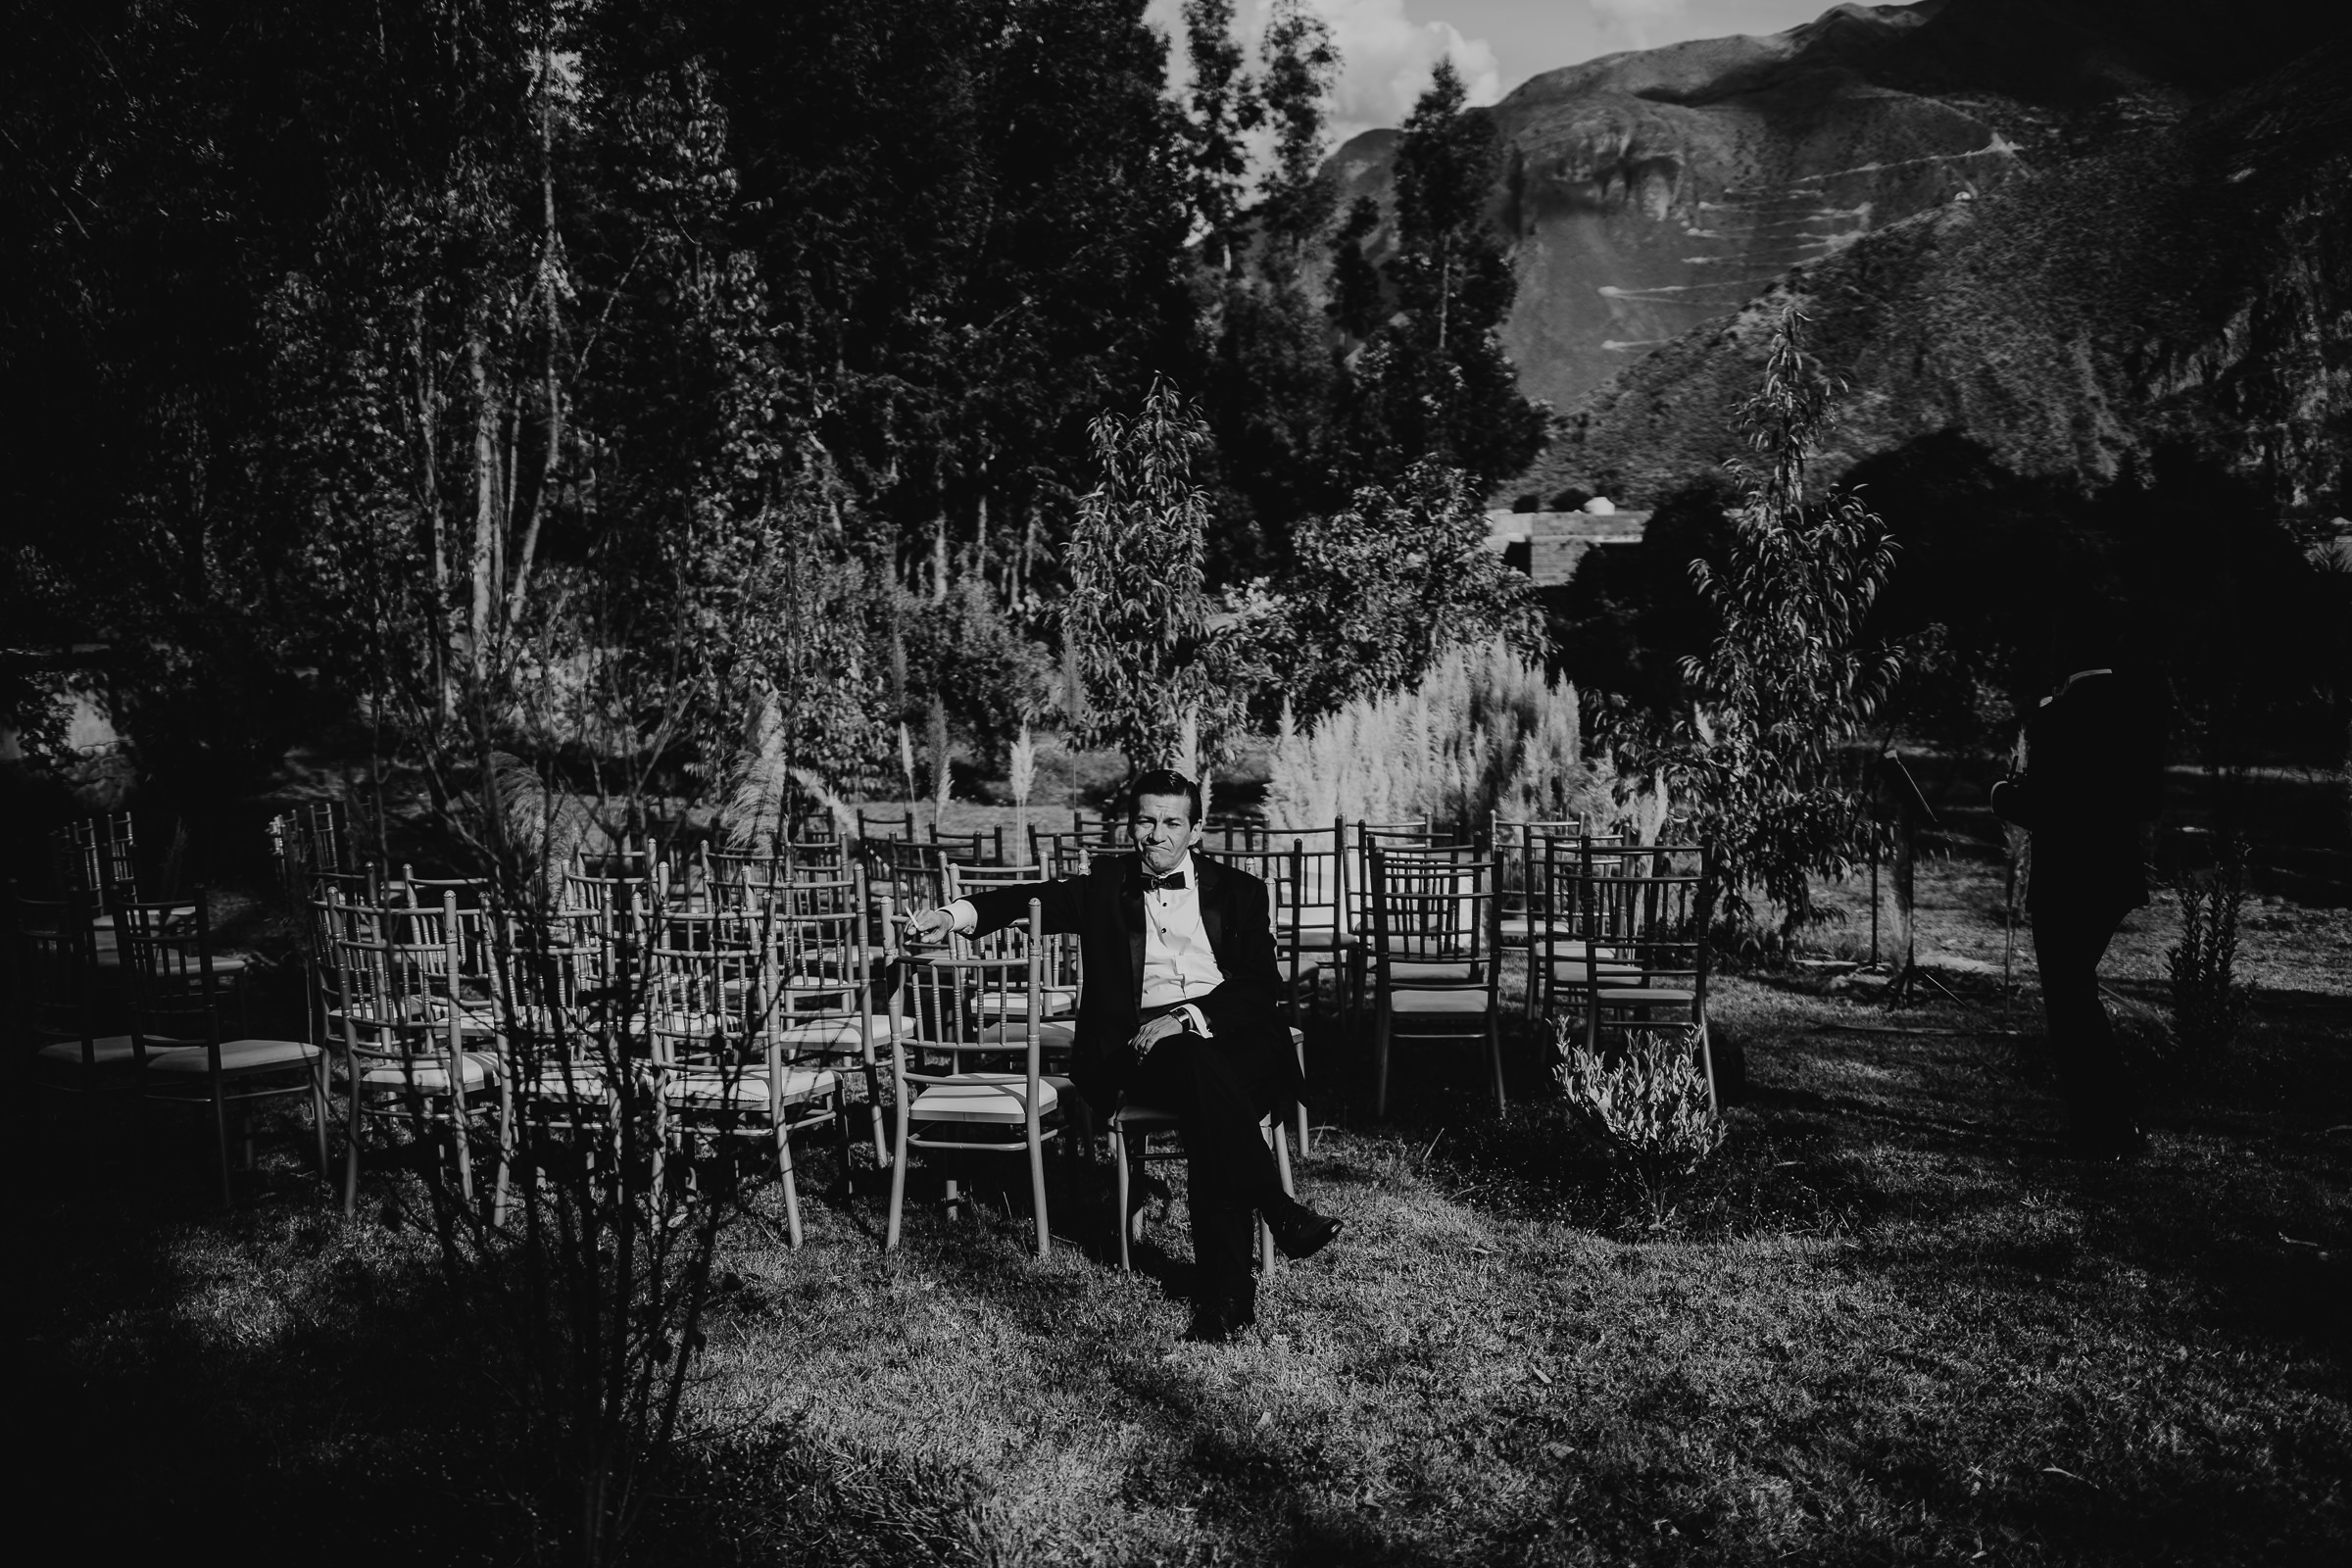 man sitting alone at a wedding ceremony set up